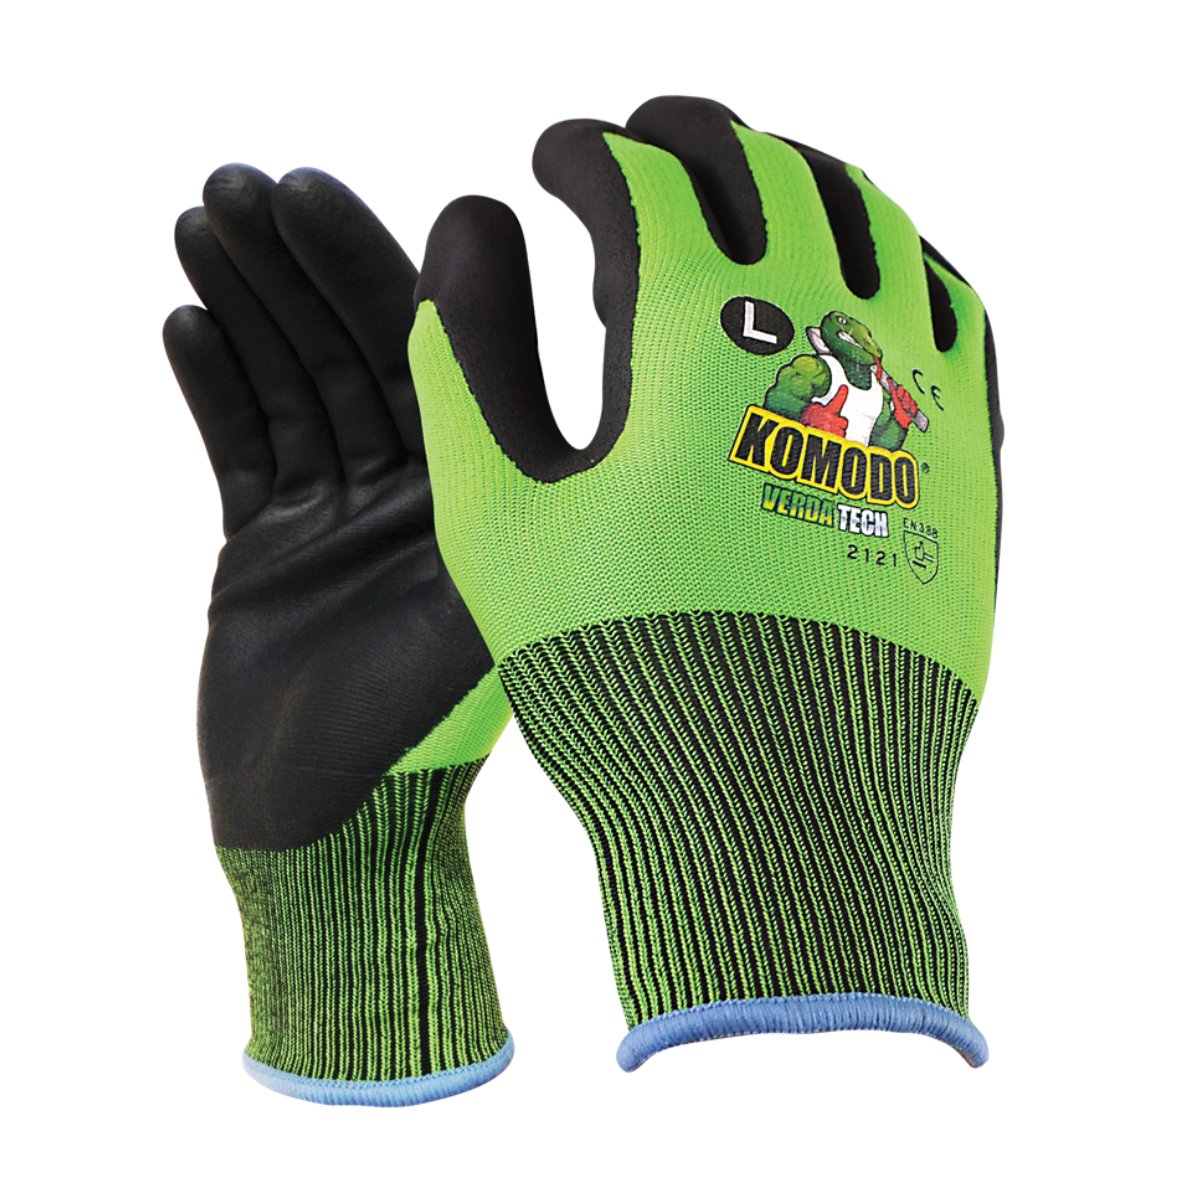 TGC KOMODO® Vigilant® Cut 1 Gloves 63120 (Pack of 12)